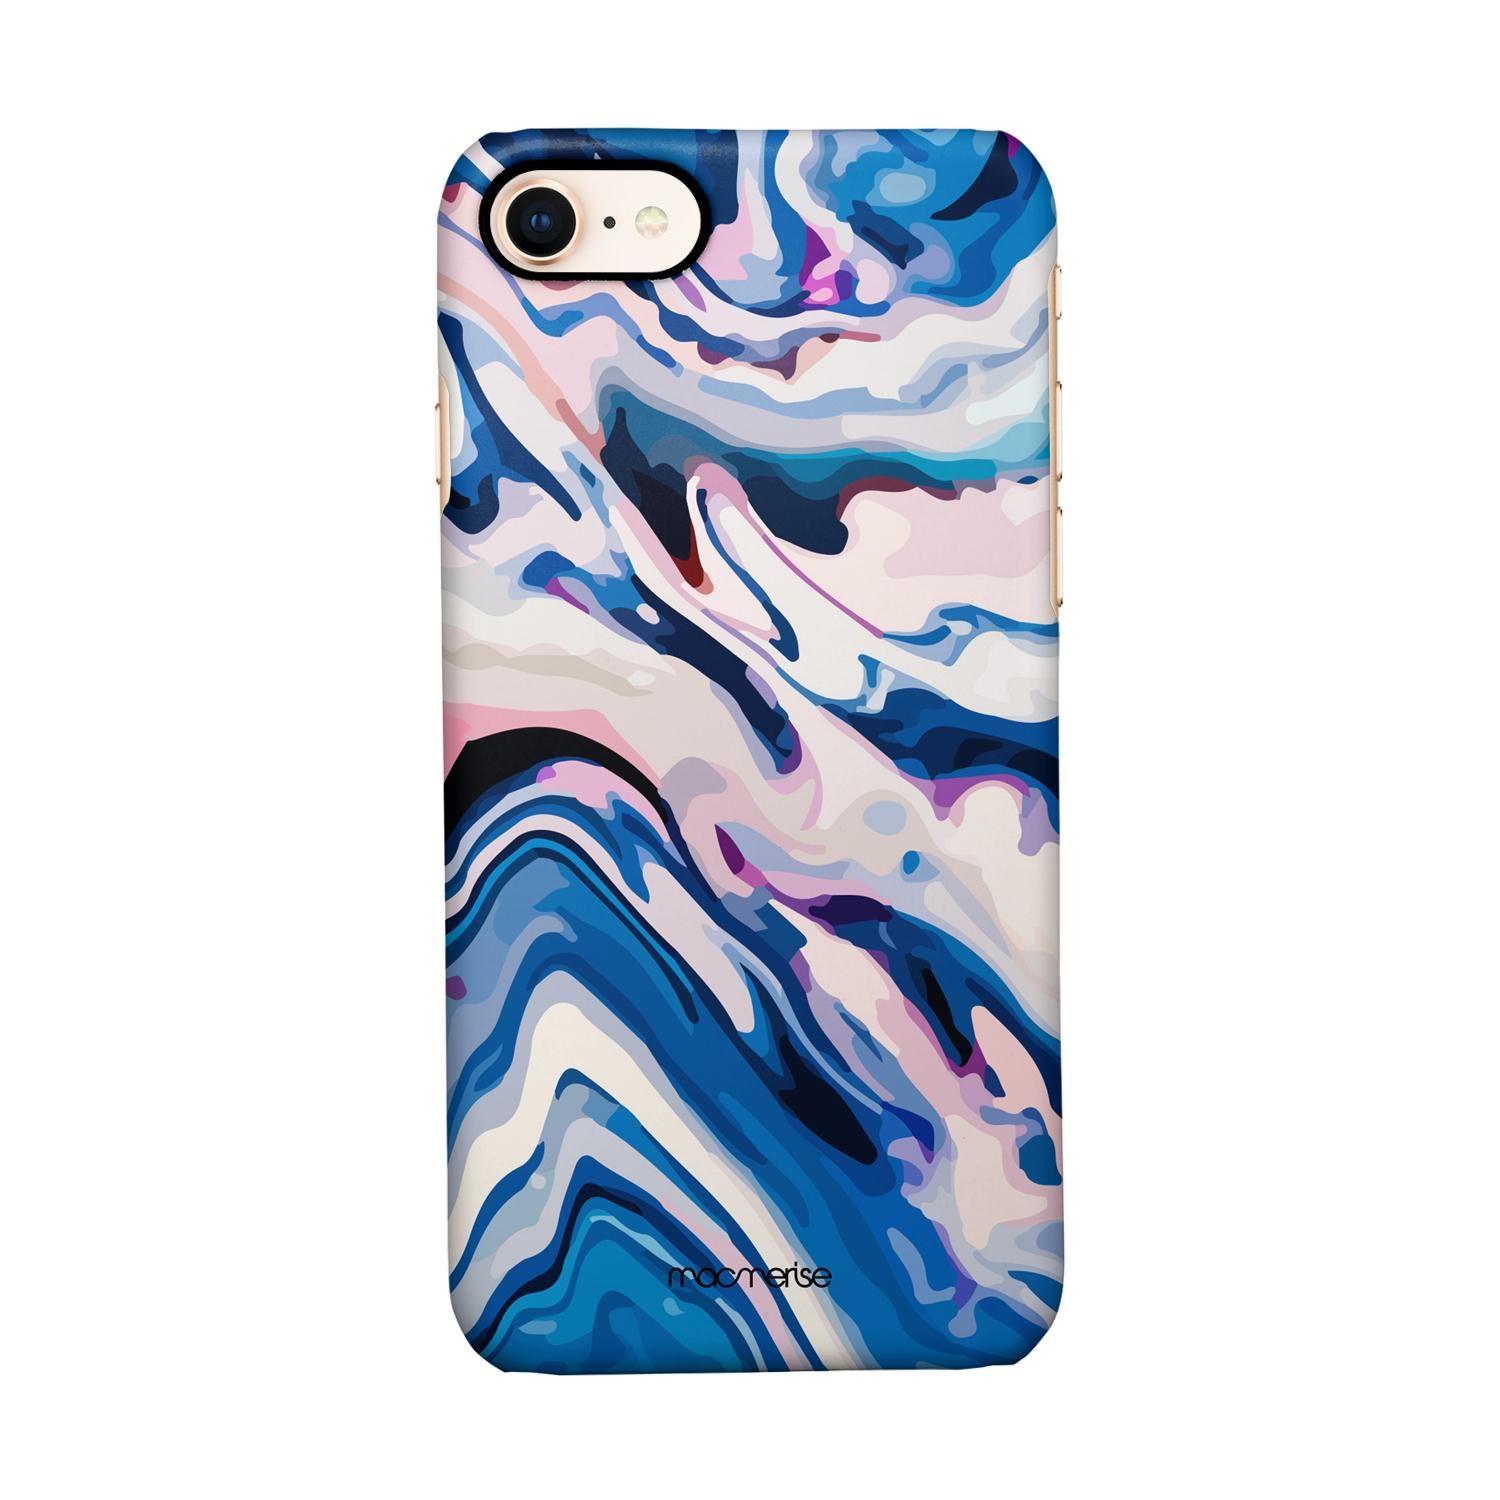 Buy Liquid Funk Pinkblue - Sleek Phone Case for iPhone 7 Online